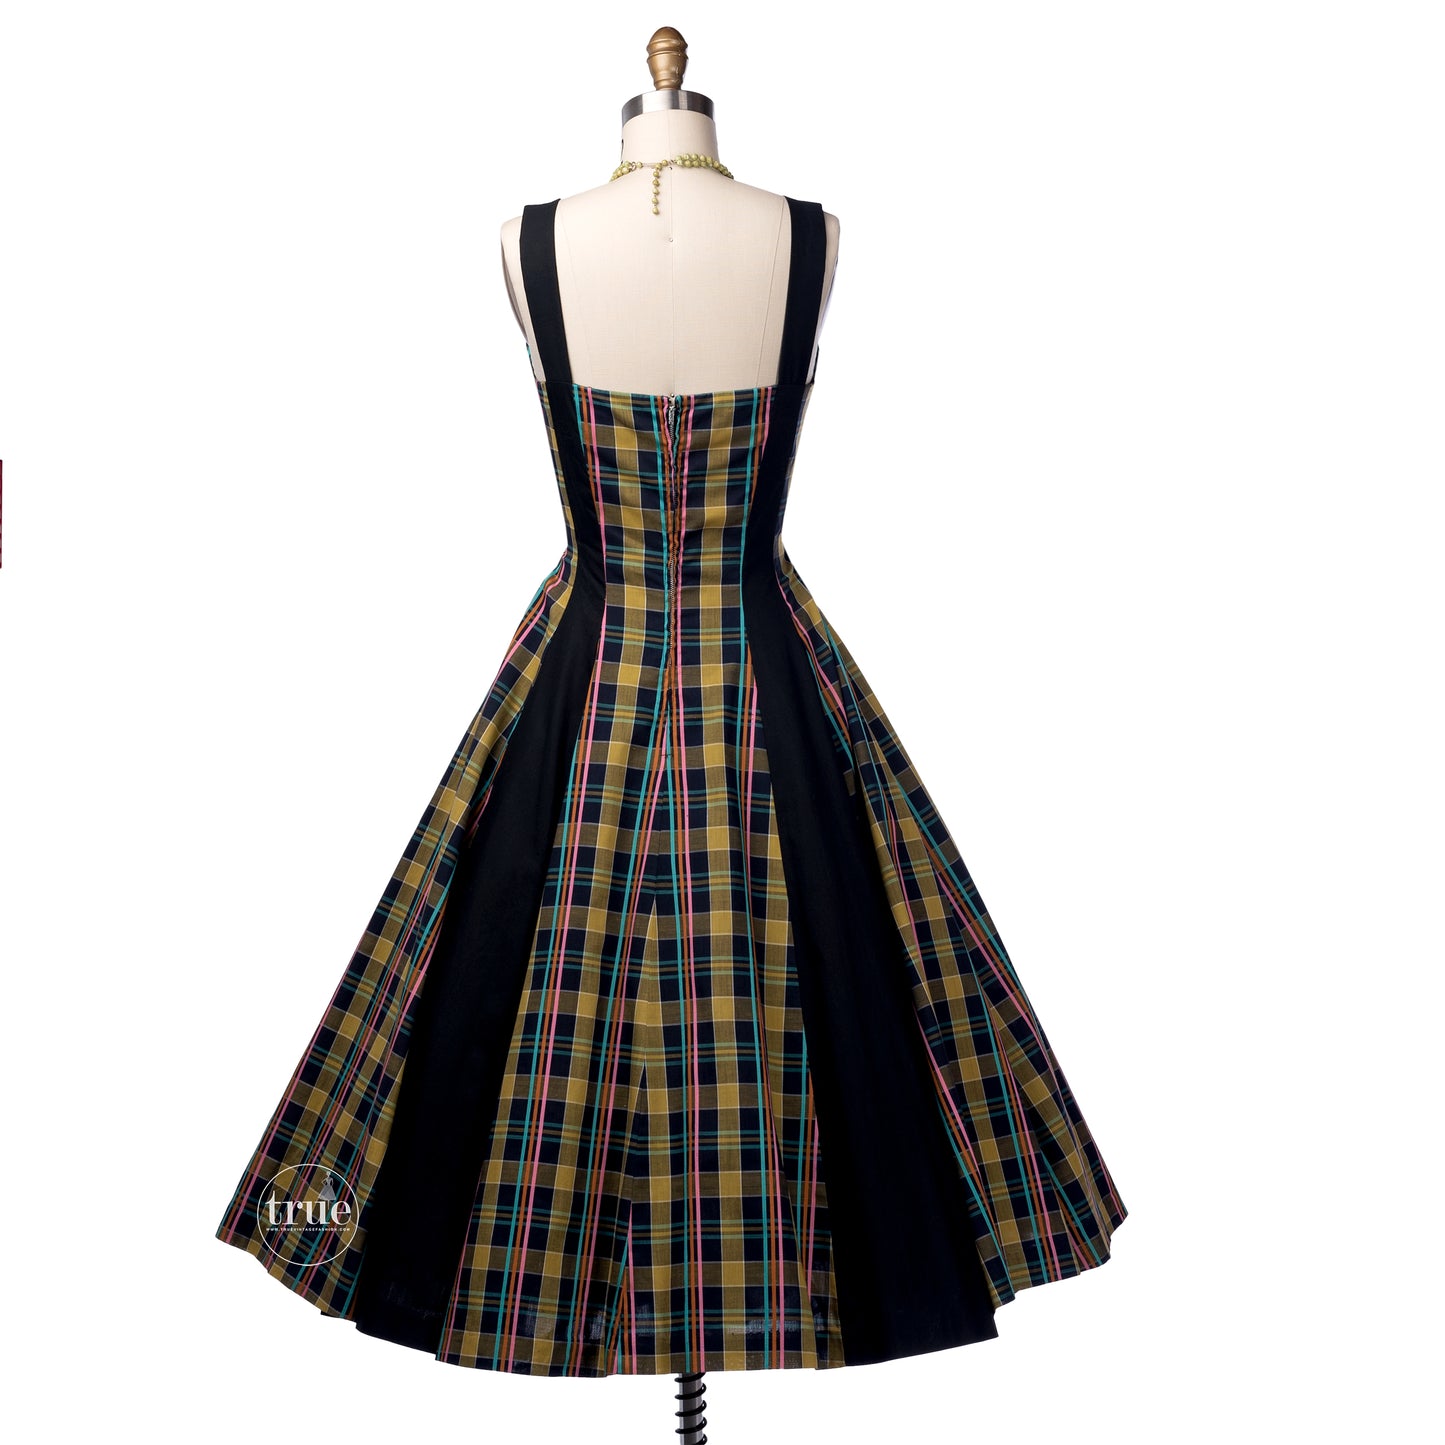 vintage 1940's dress ...fun Miami Miss colorful woven summer plaid full skirt dress